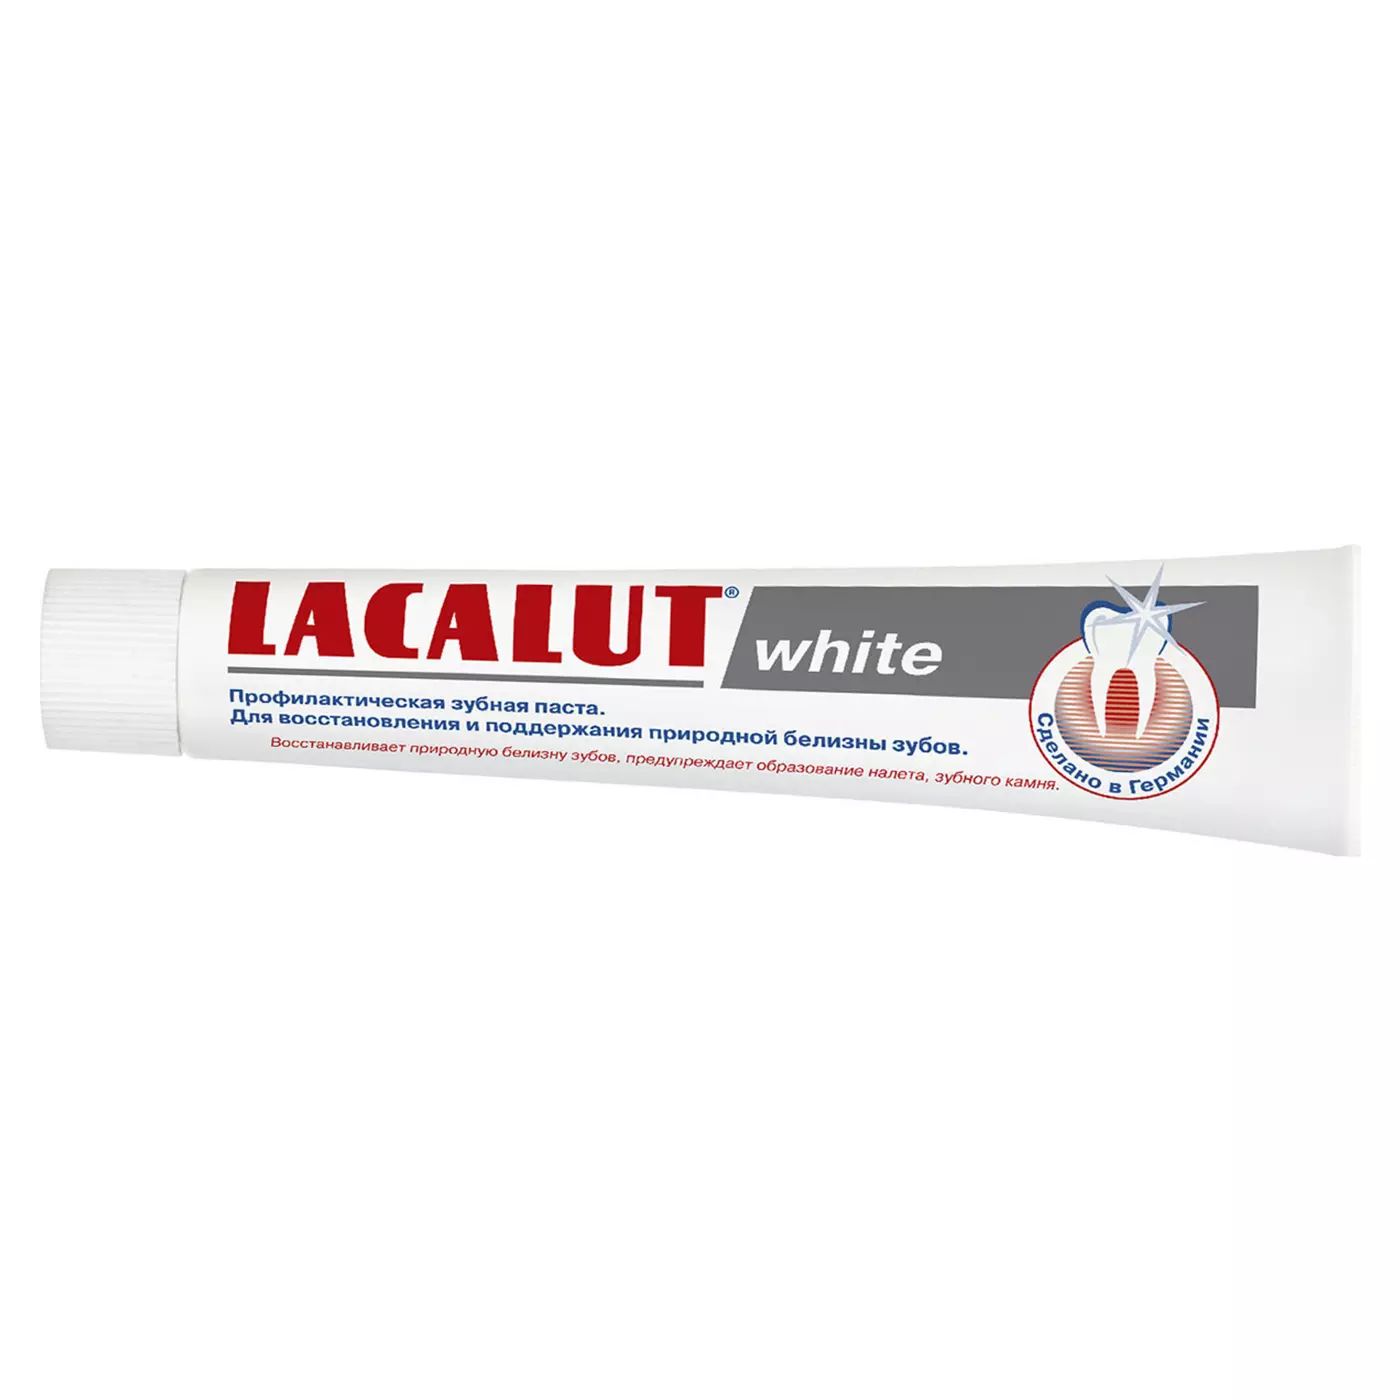 Профилактическая зубная паста LACALUT white 75 мл lacalut lacalut white зубная паста 75 мл